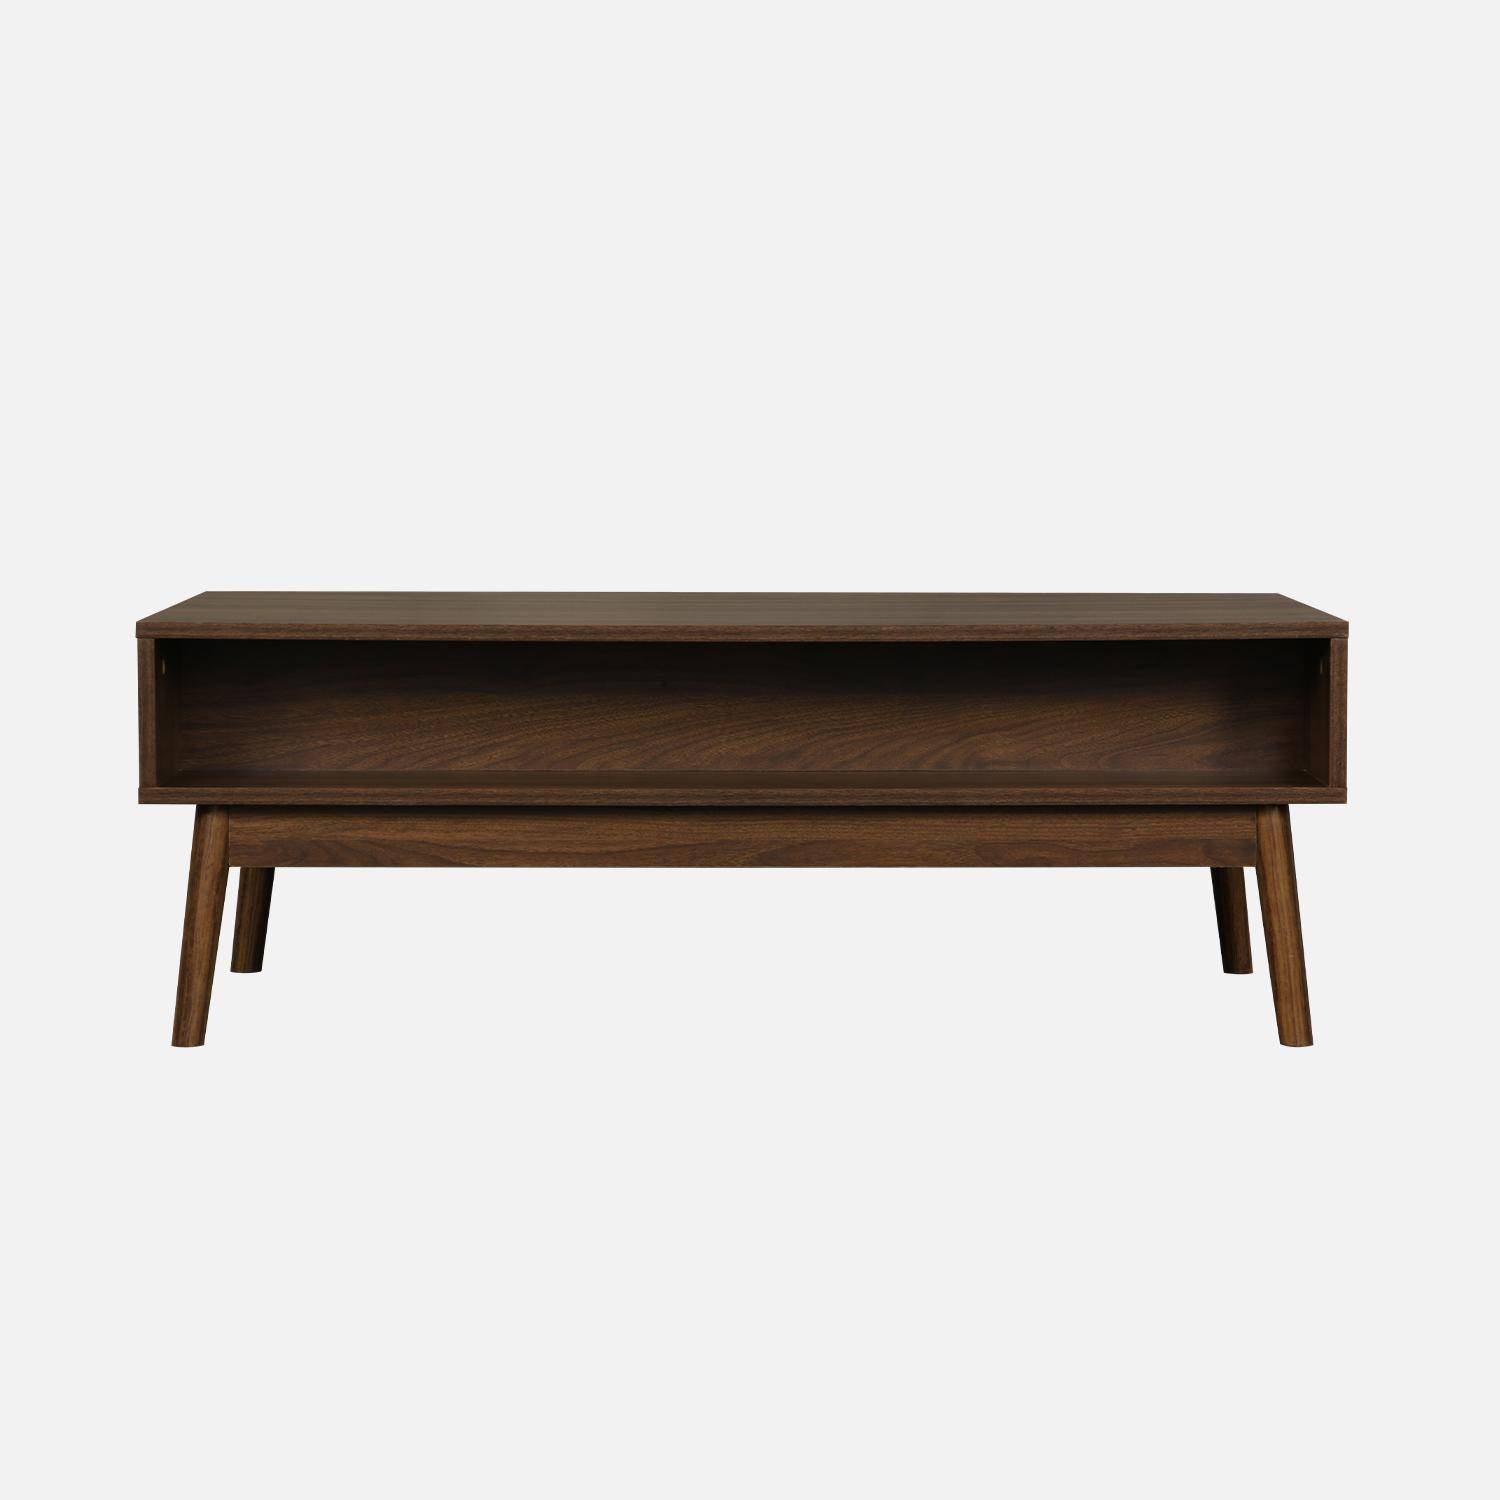 Wooden coffee table with one drawer storage, dark wood, L110xW59xH39cm Photo7